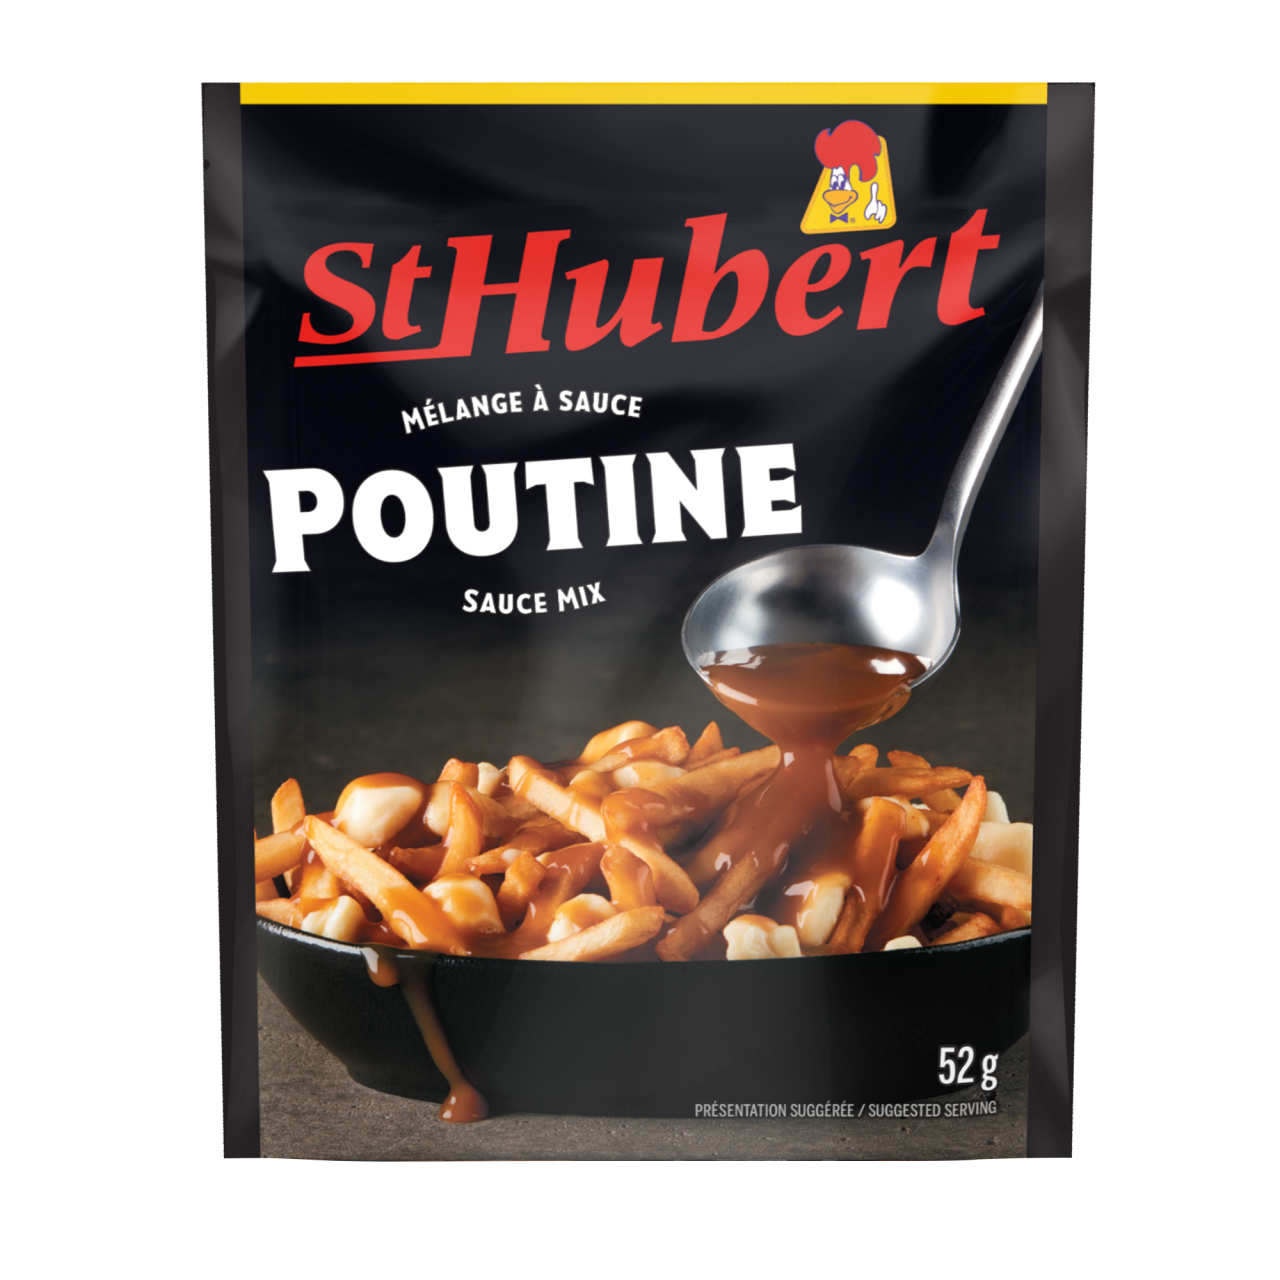 St-Hubert Original Poutine Gravy Mix